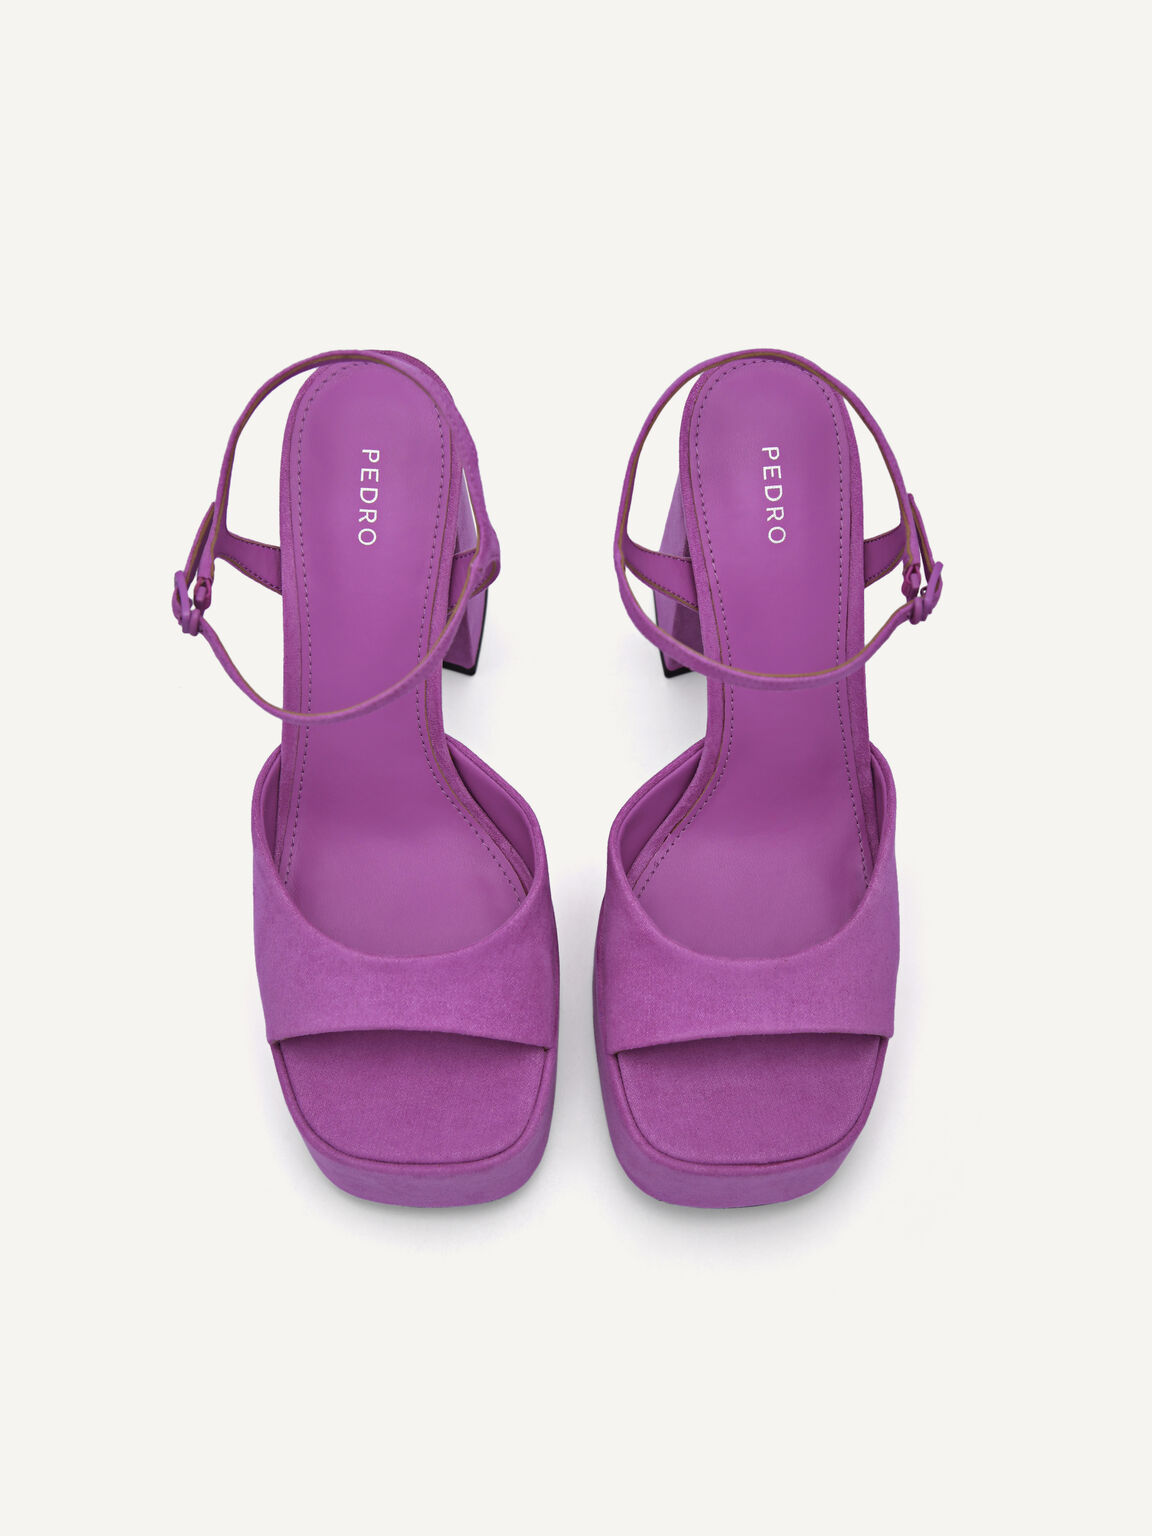 Selma Platform Heel Sandals, Berry